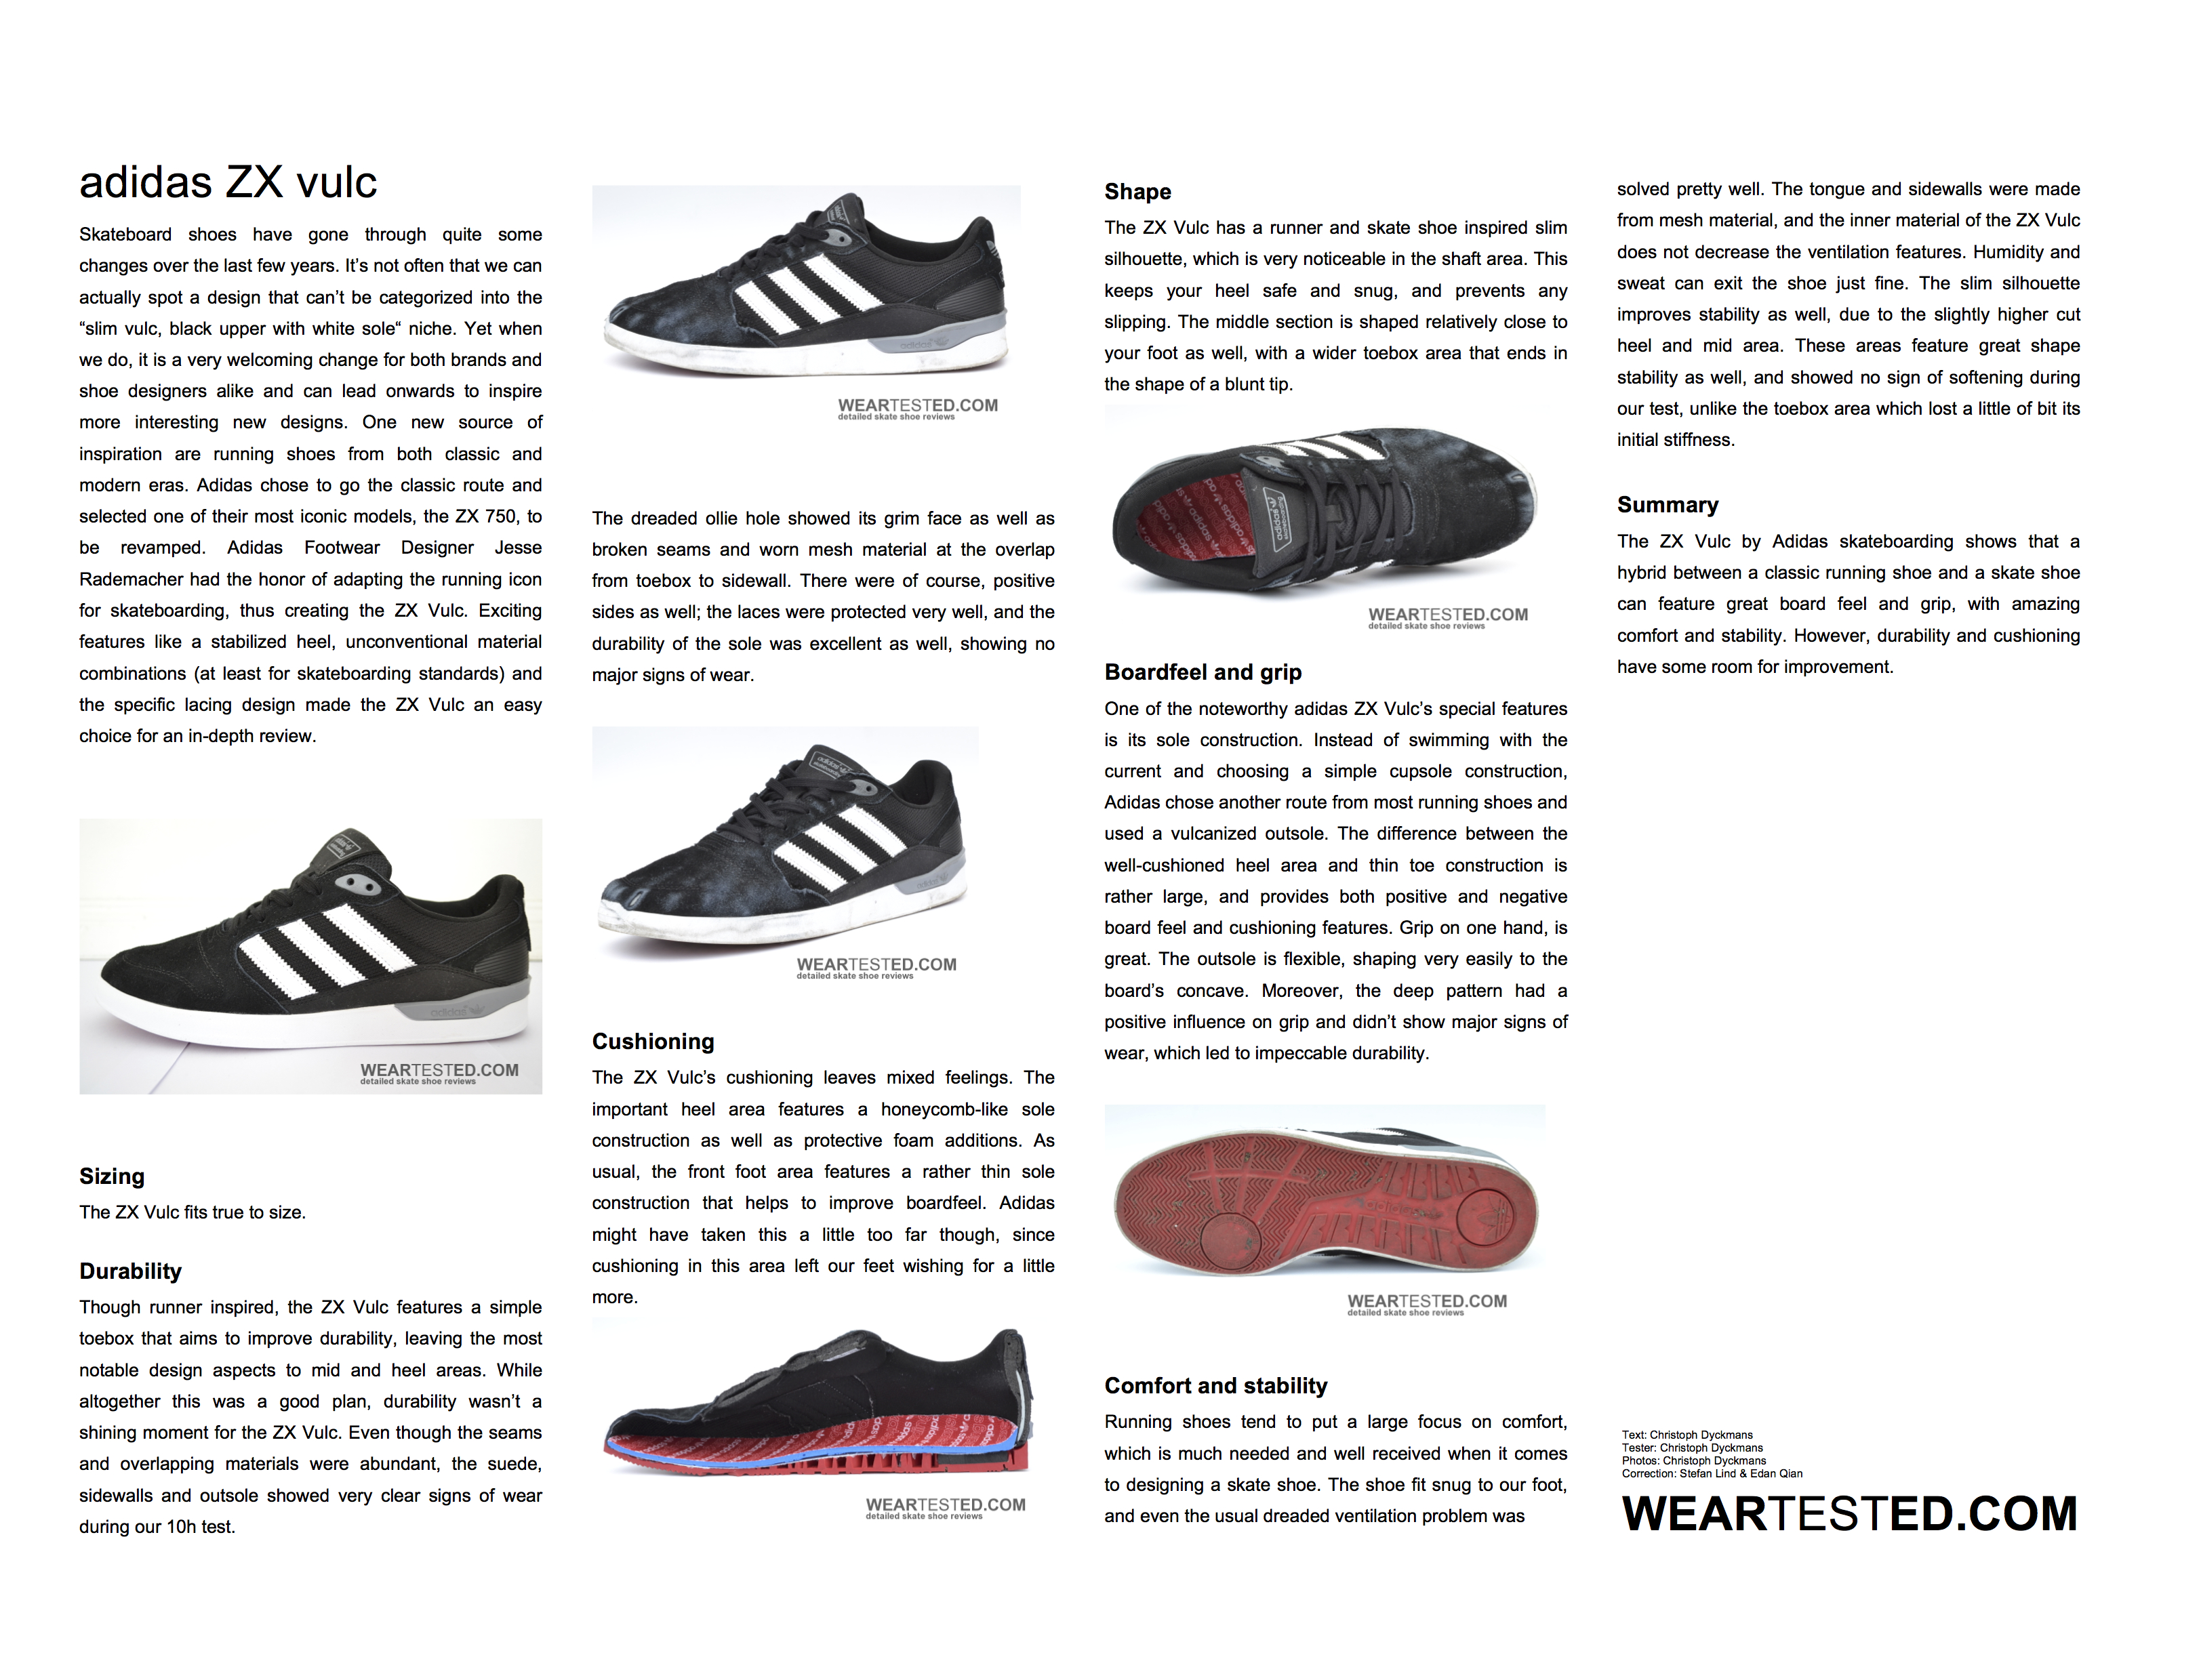 adidas zx vulc skate shoes